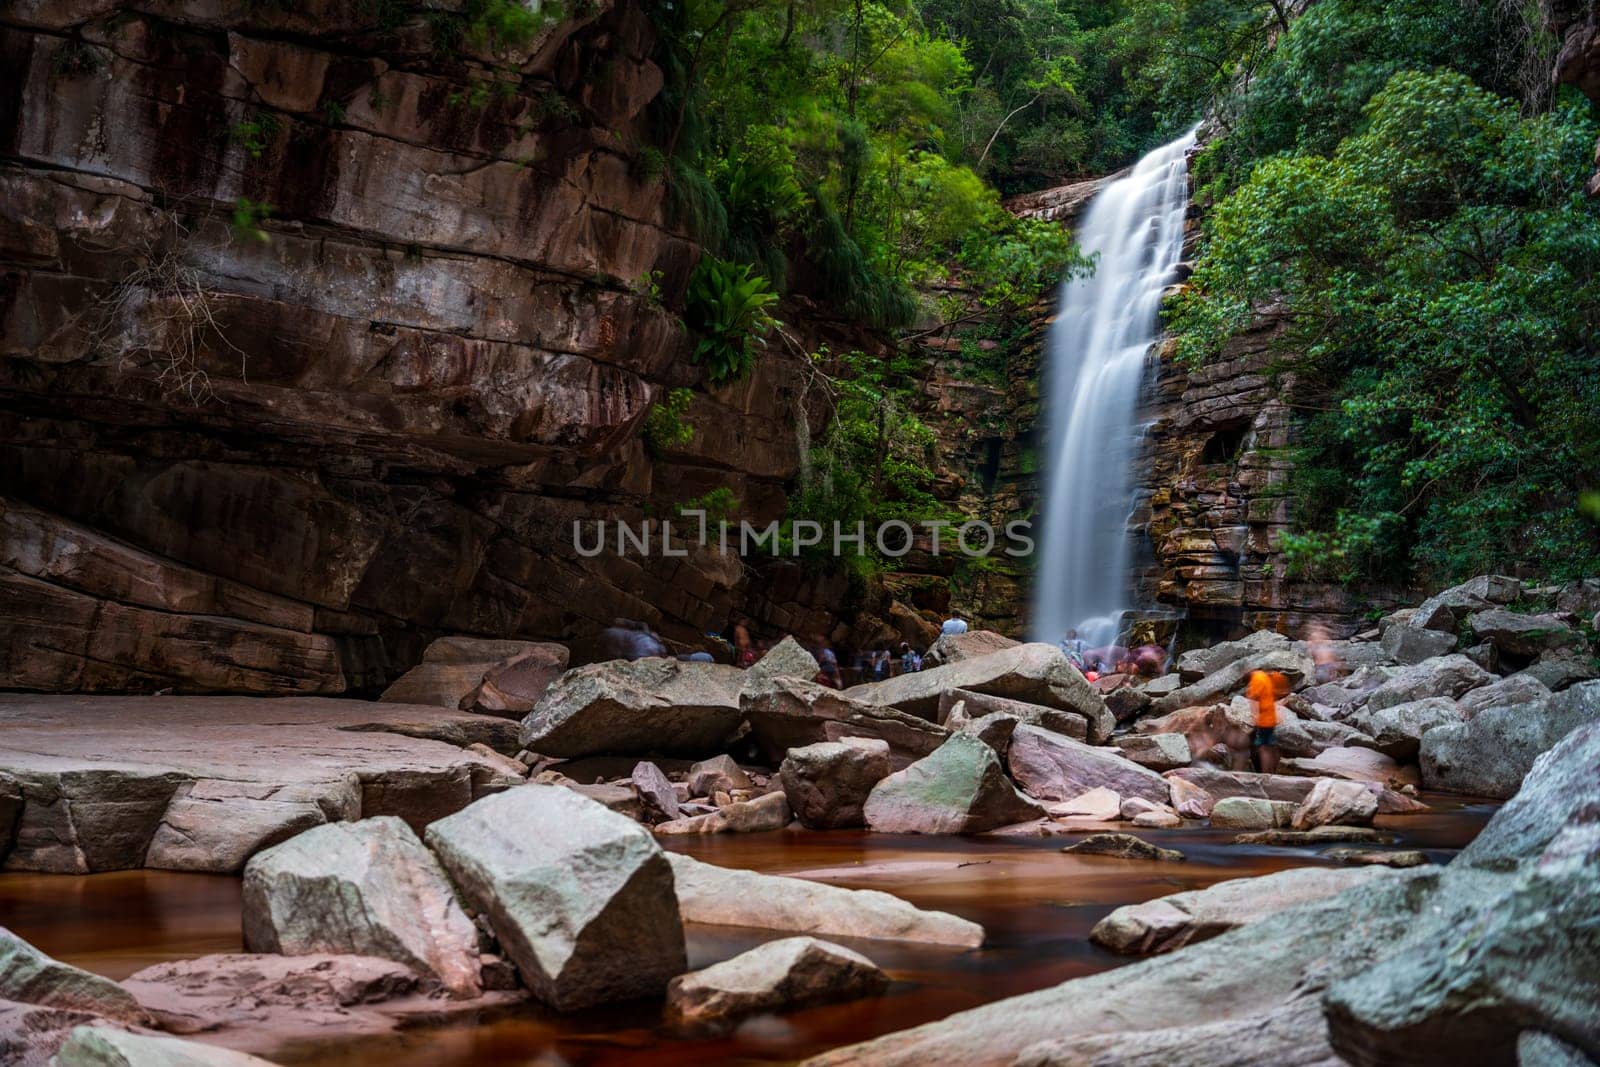 Serene Waterfall Oasis Amidst Rugged Rocks and Greenery by FerradalFCG